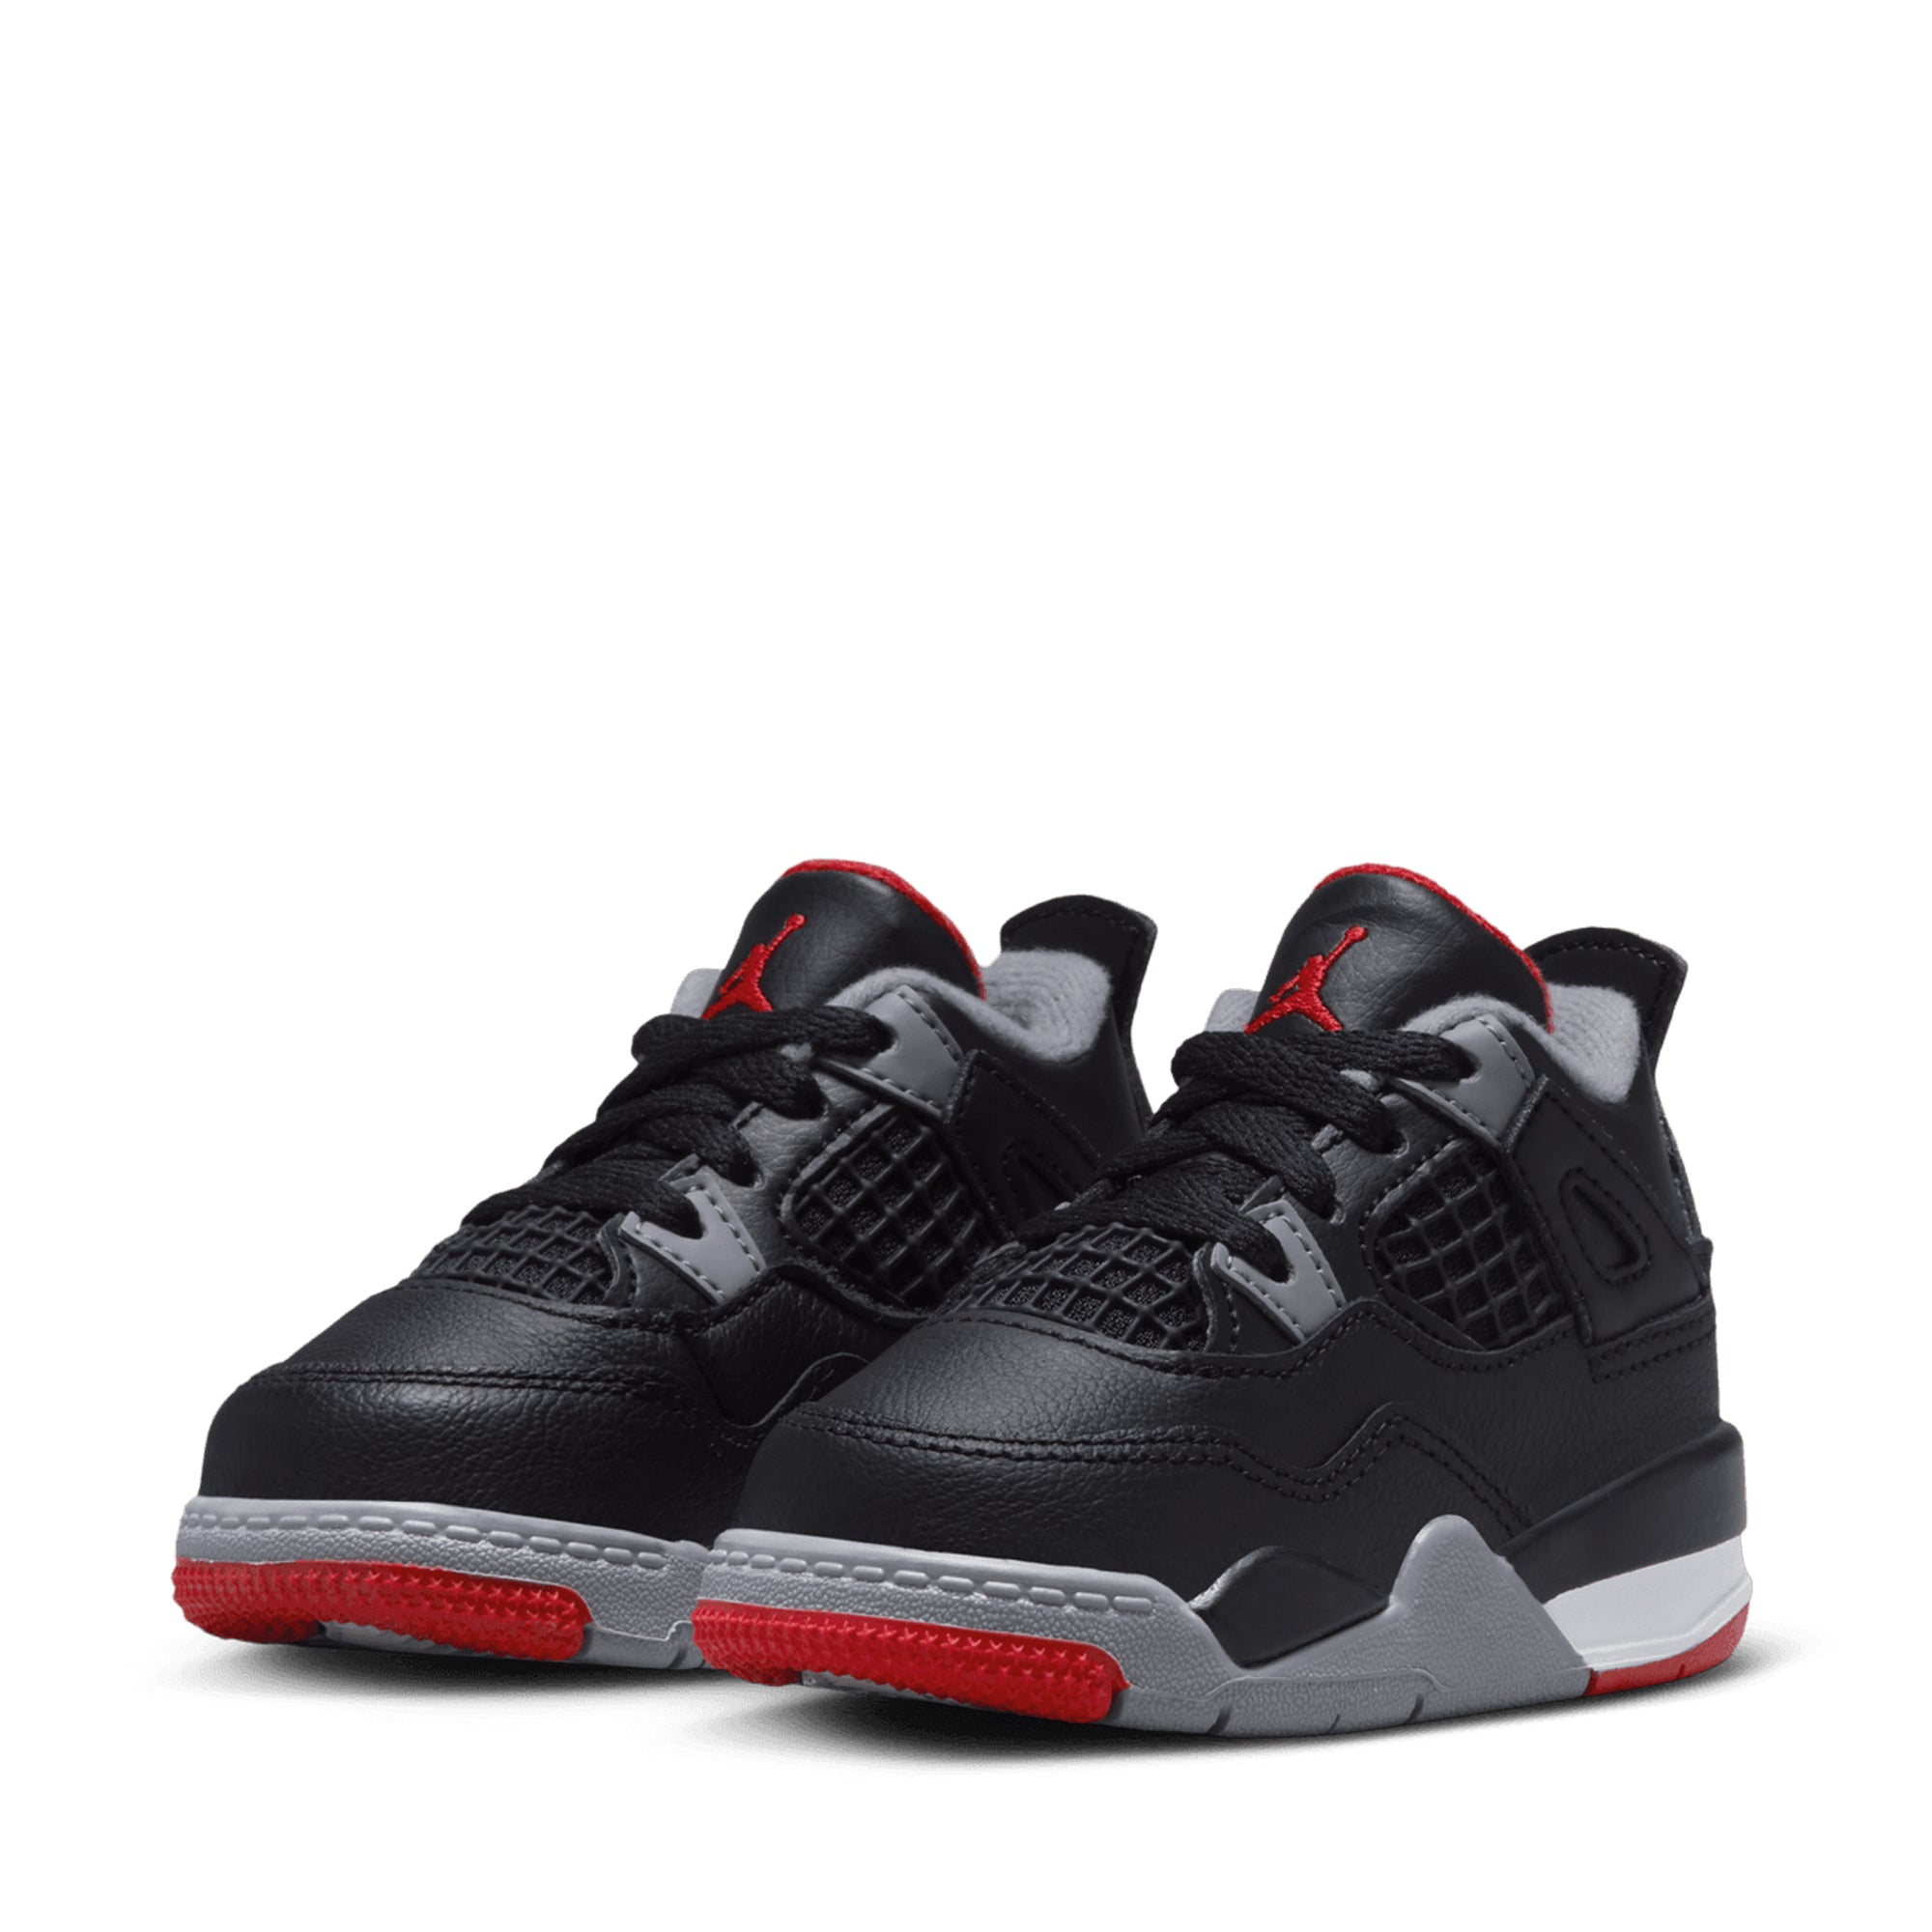 Jordan 4 Retro 'Bred Reimagined' (TD) - Black/Fire Red